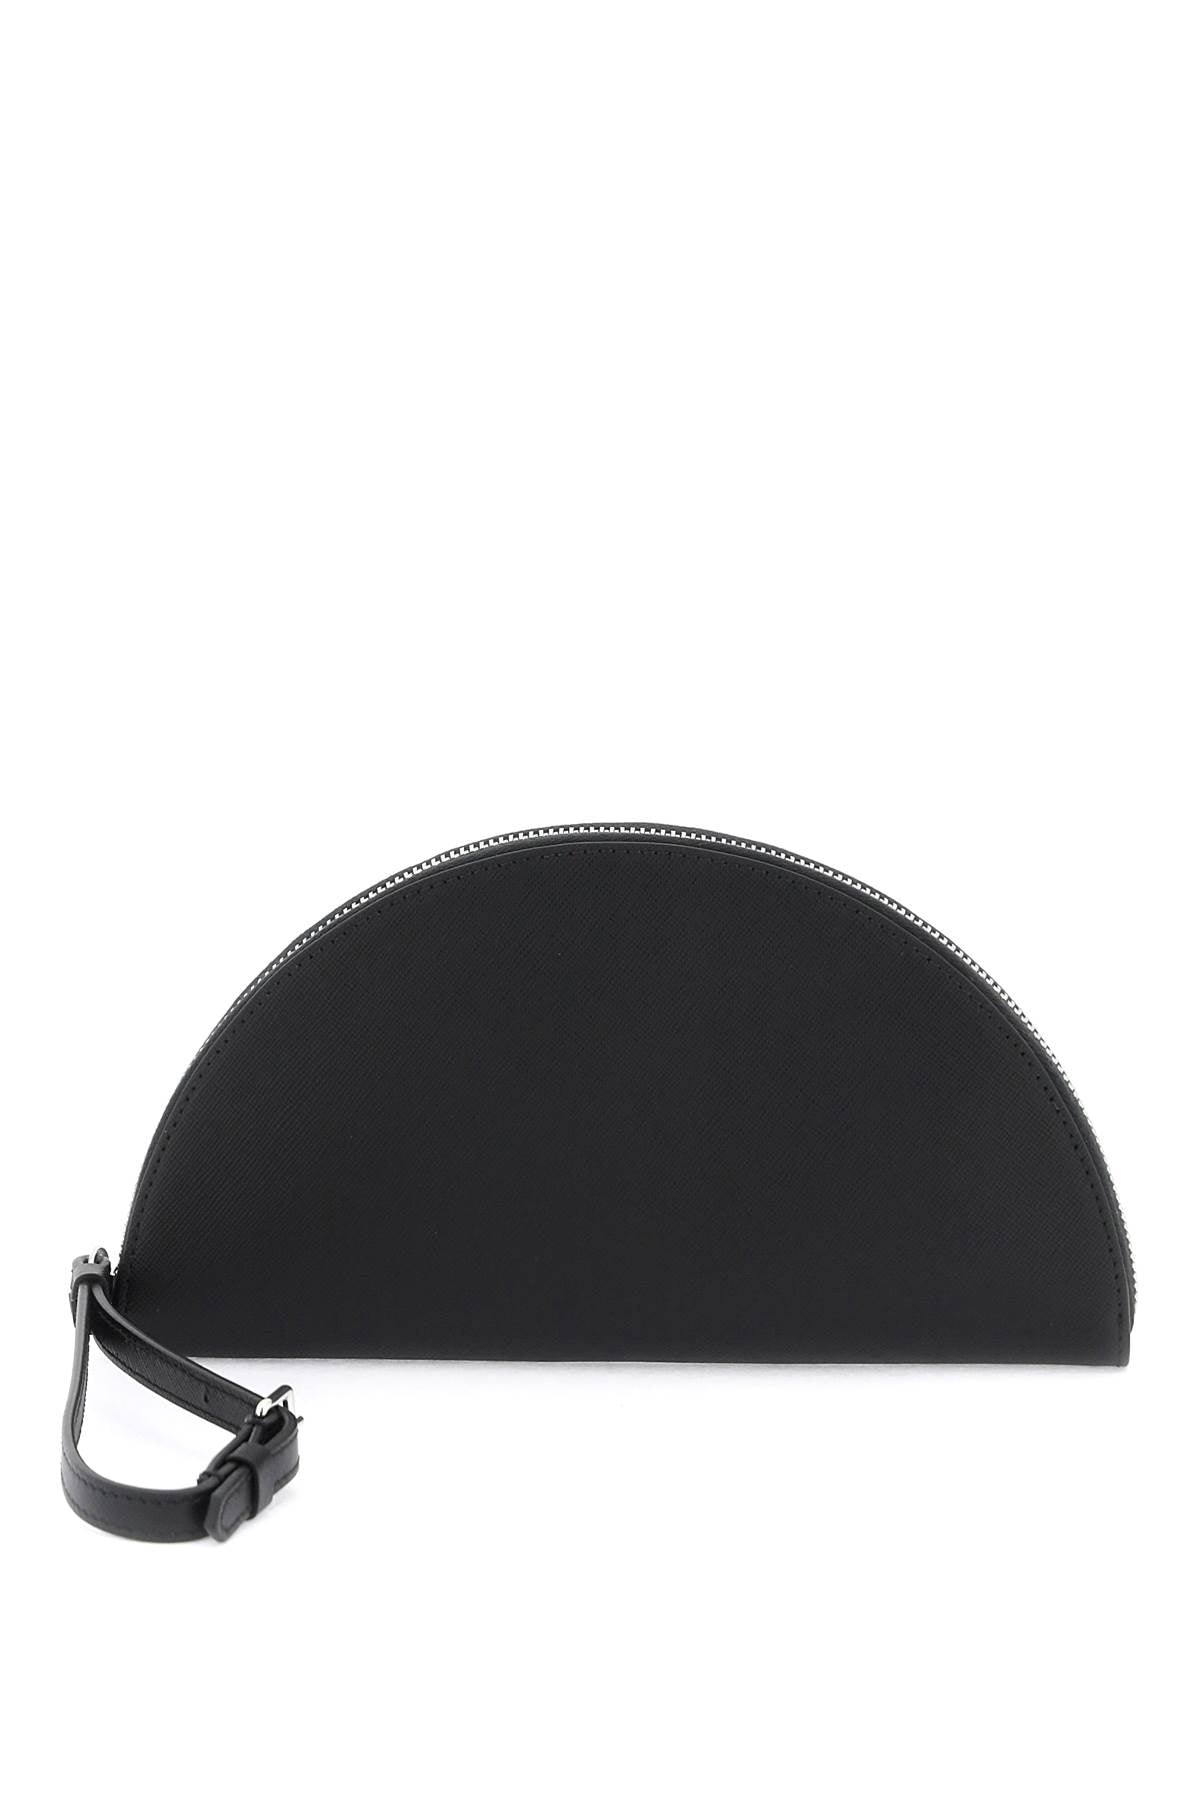 Maison margiela saffiano leather pouch with wrist handle.-0